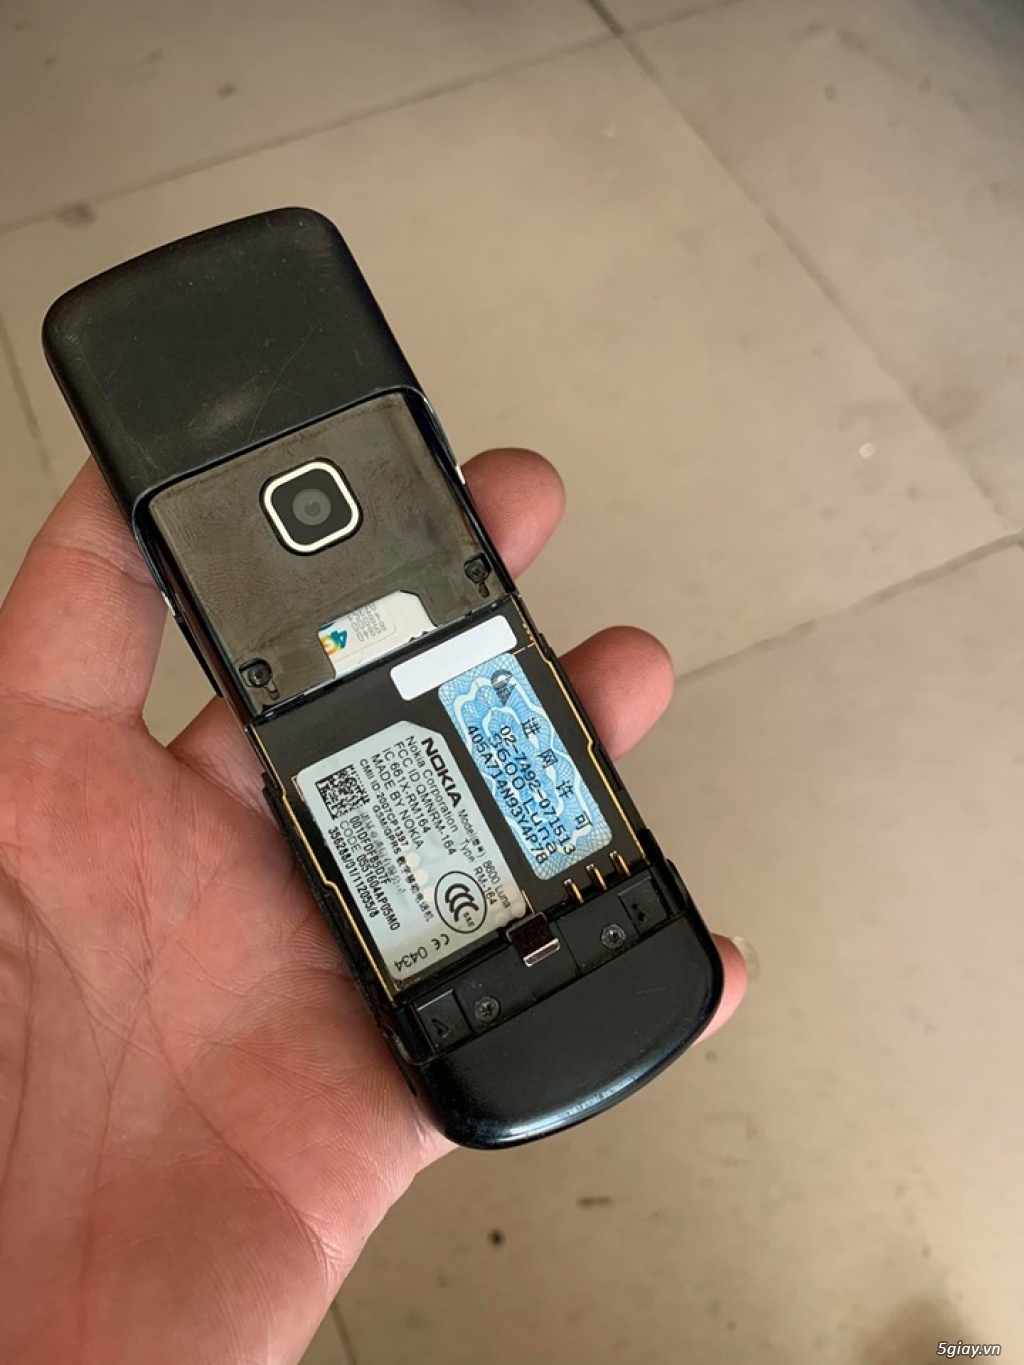 Nokia 8600 luna zin - giá hạt dẽ - 3